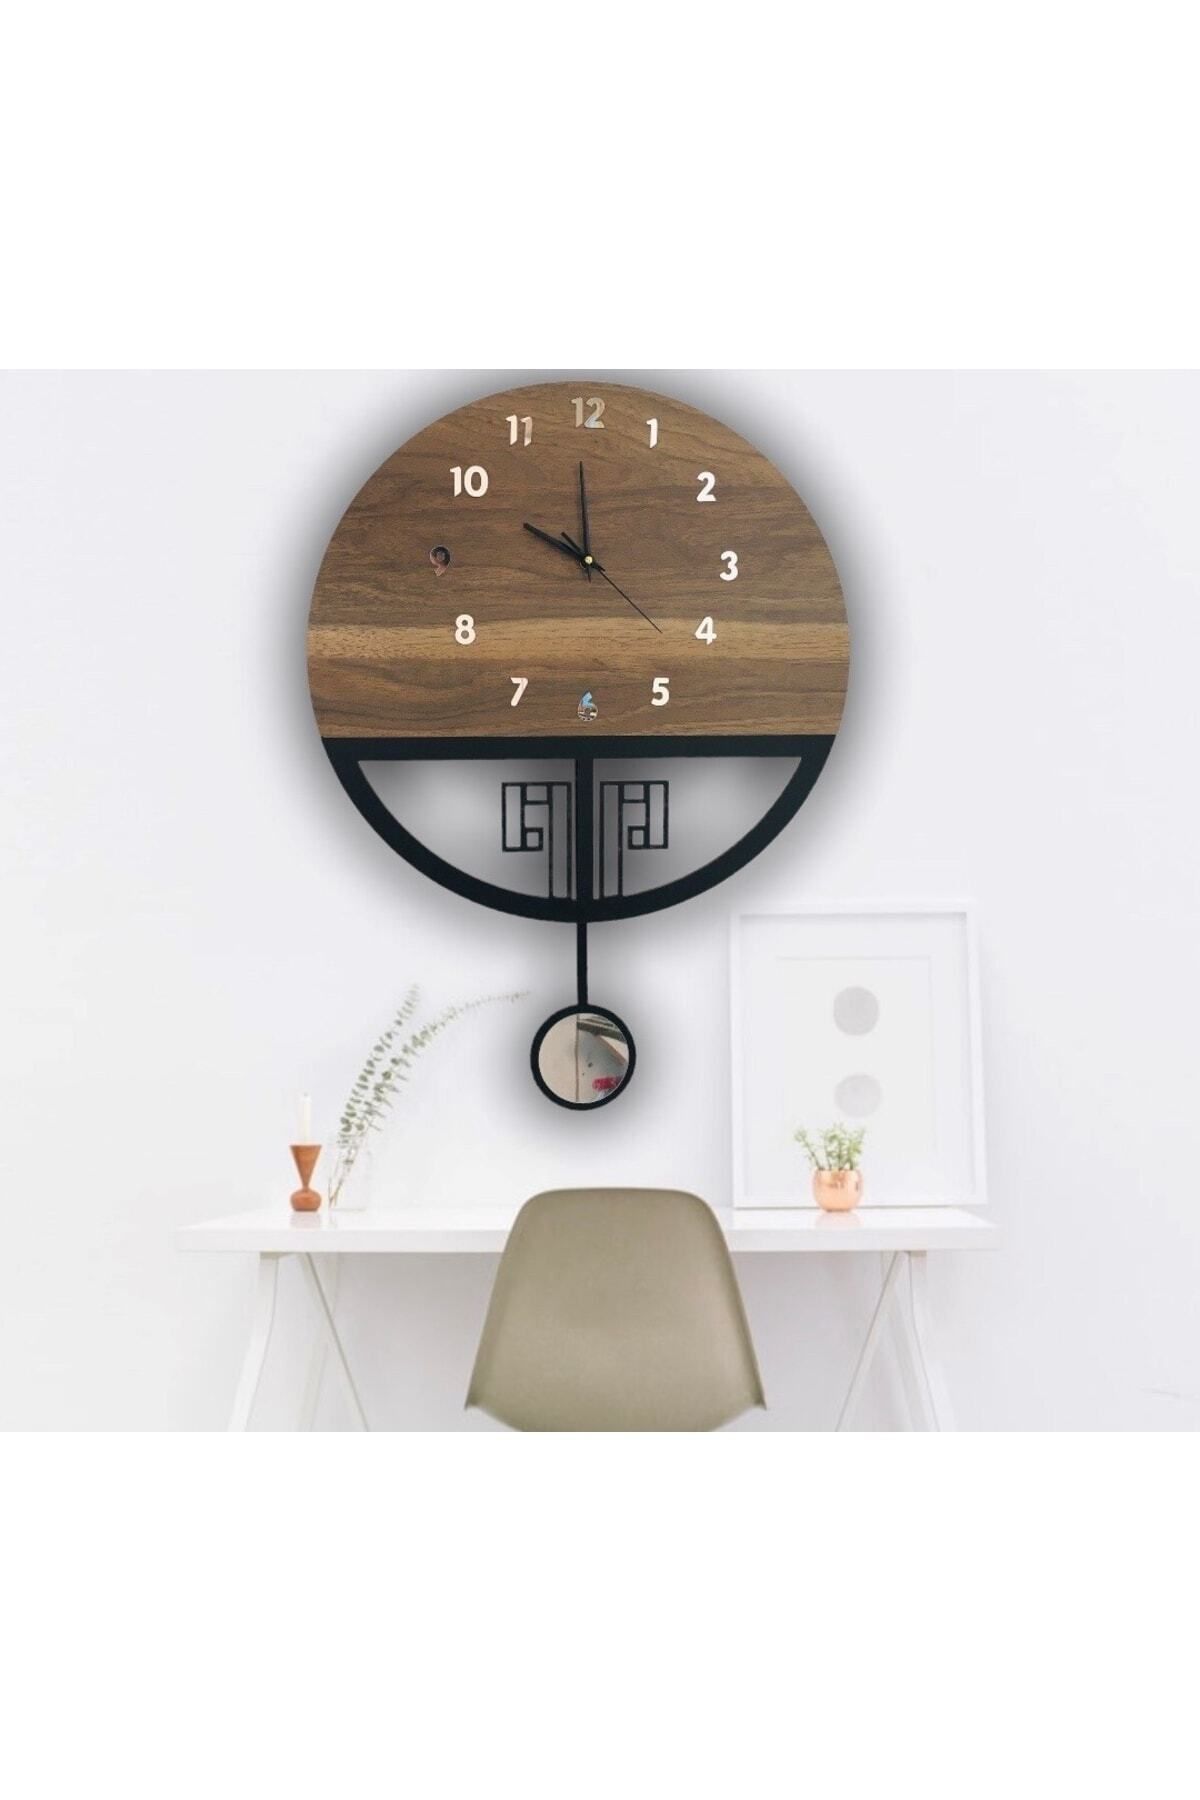 Ste Desing (SESSİZ) Sarkaçlı Ahşap Duvar Saati, Sarkaçlı Saat, Wooden Wall Clock